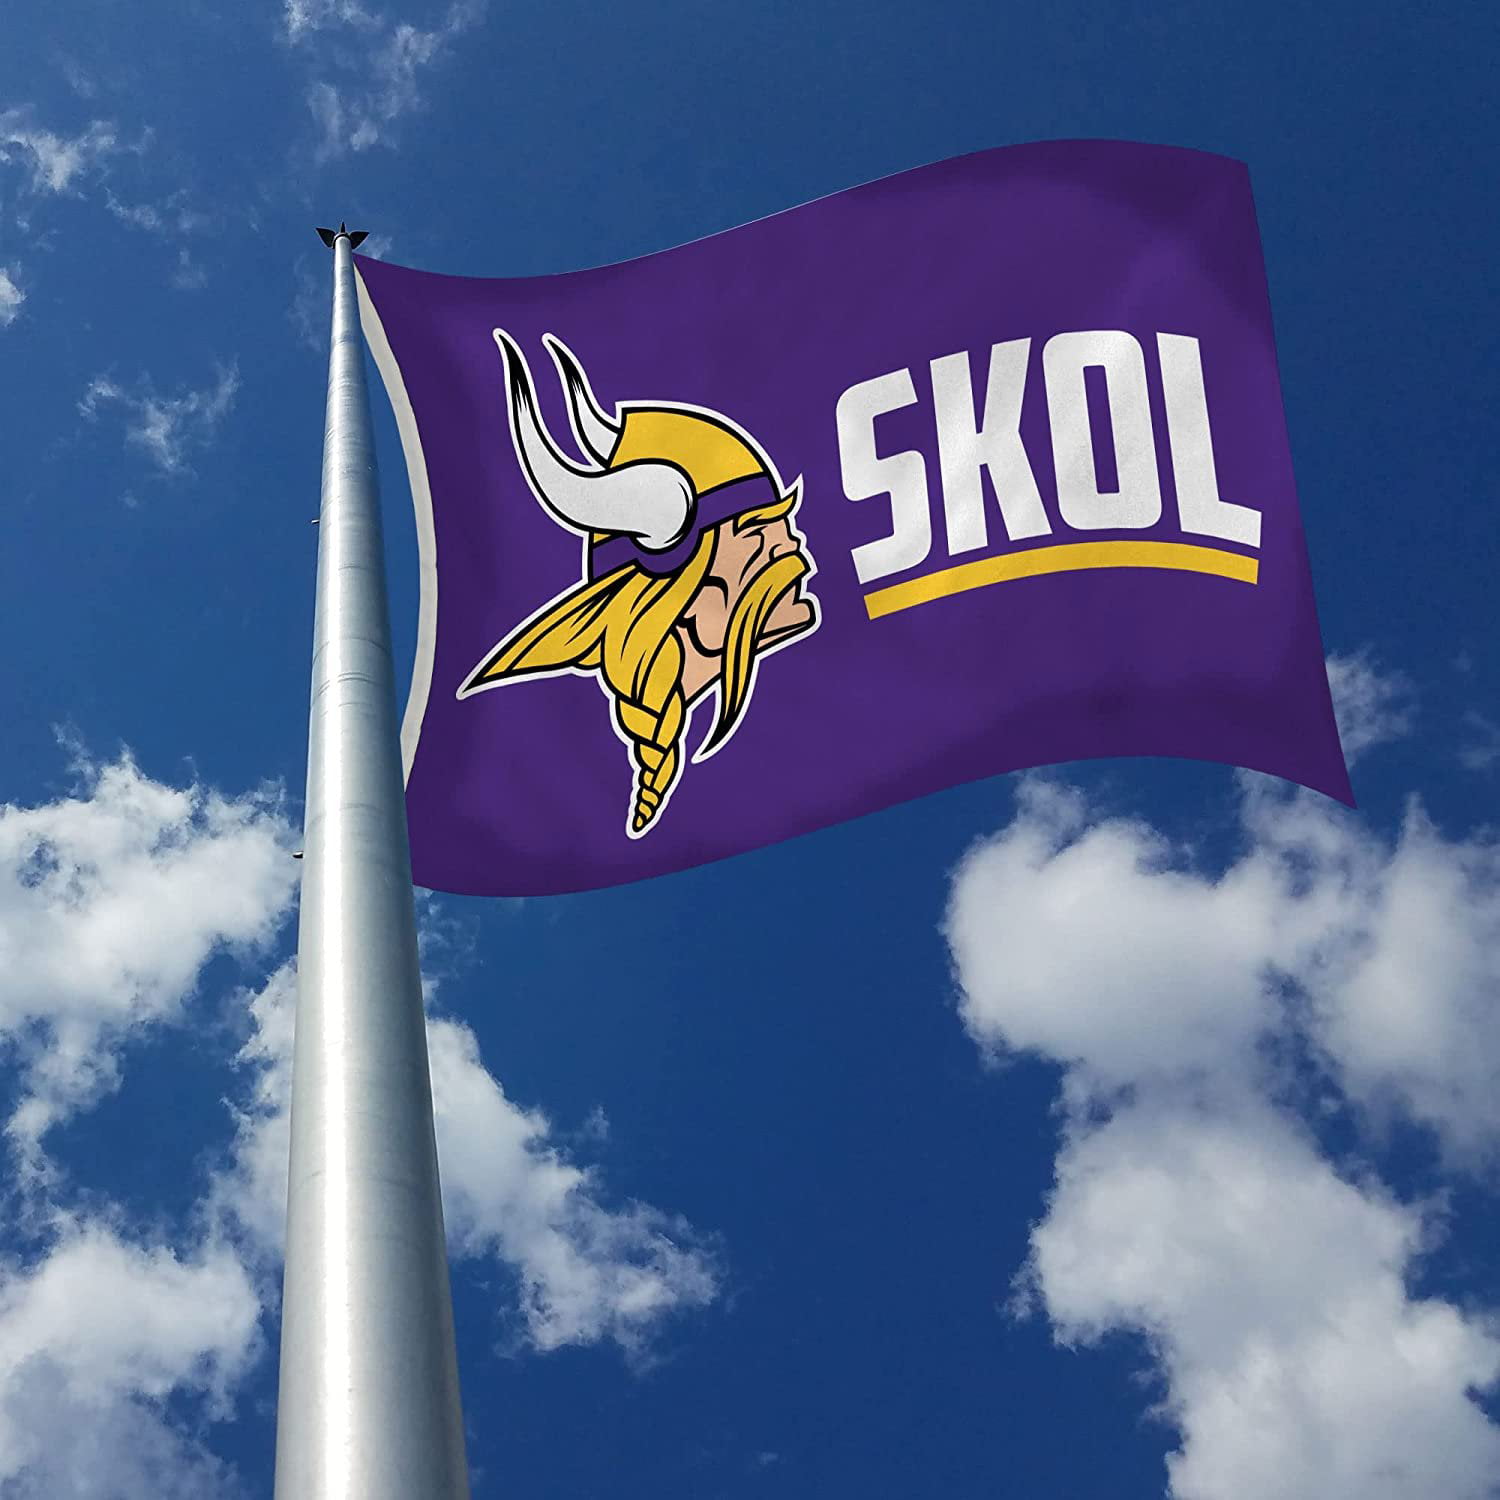 Minnesota SKOL Vikings NFL Banner Flag - 3x5 foot - Includes brass grommets  - Walmart.com